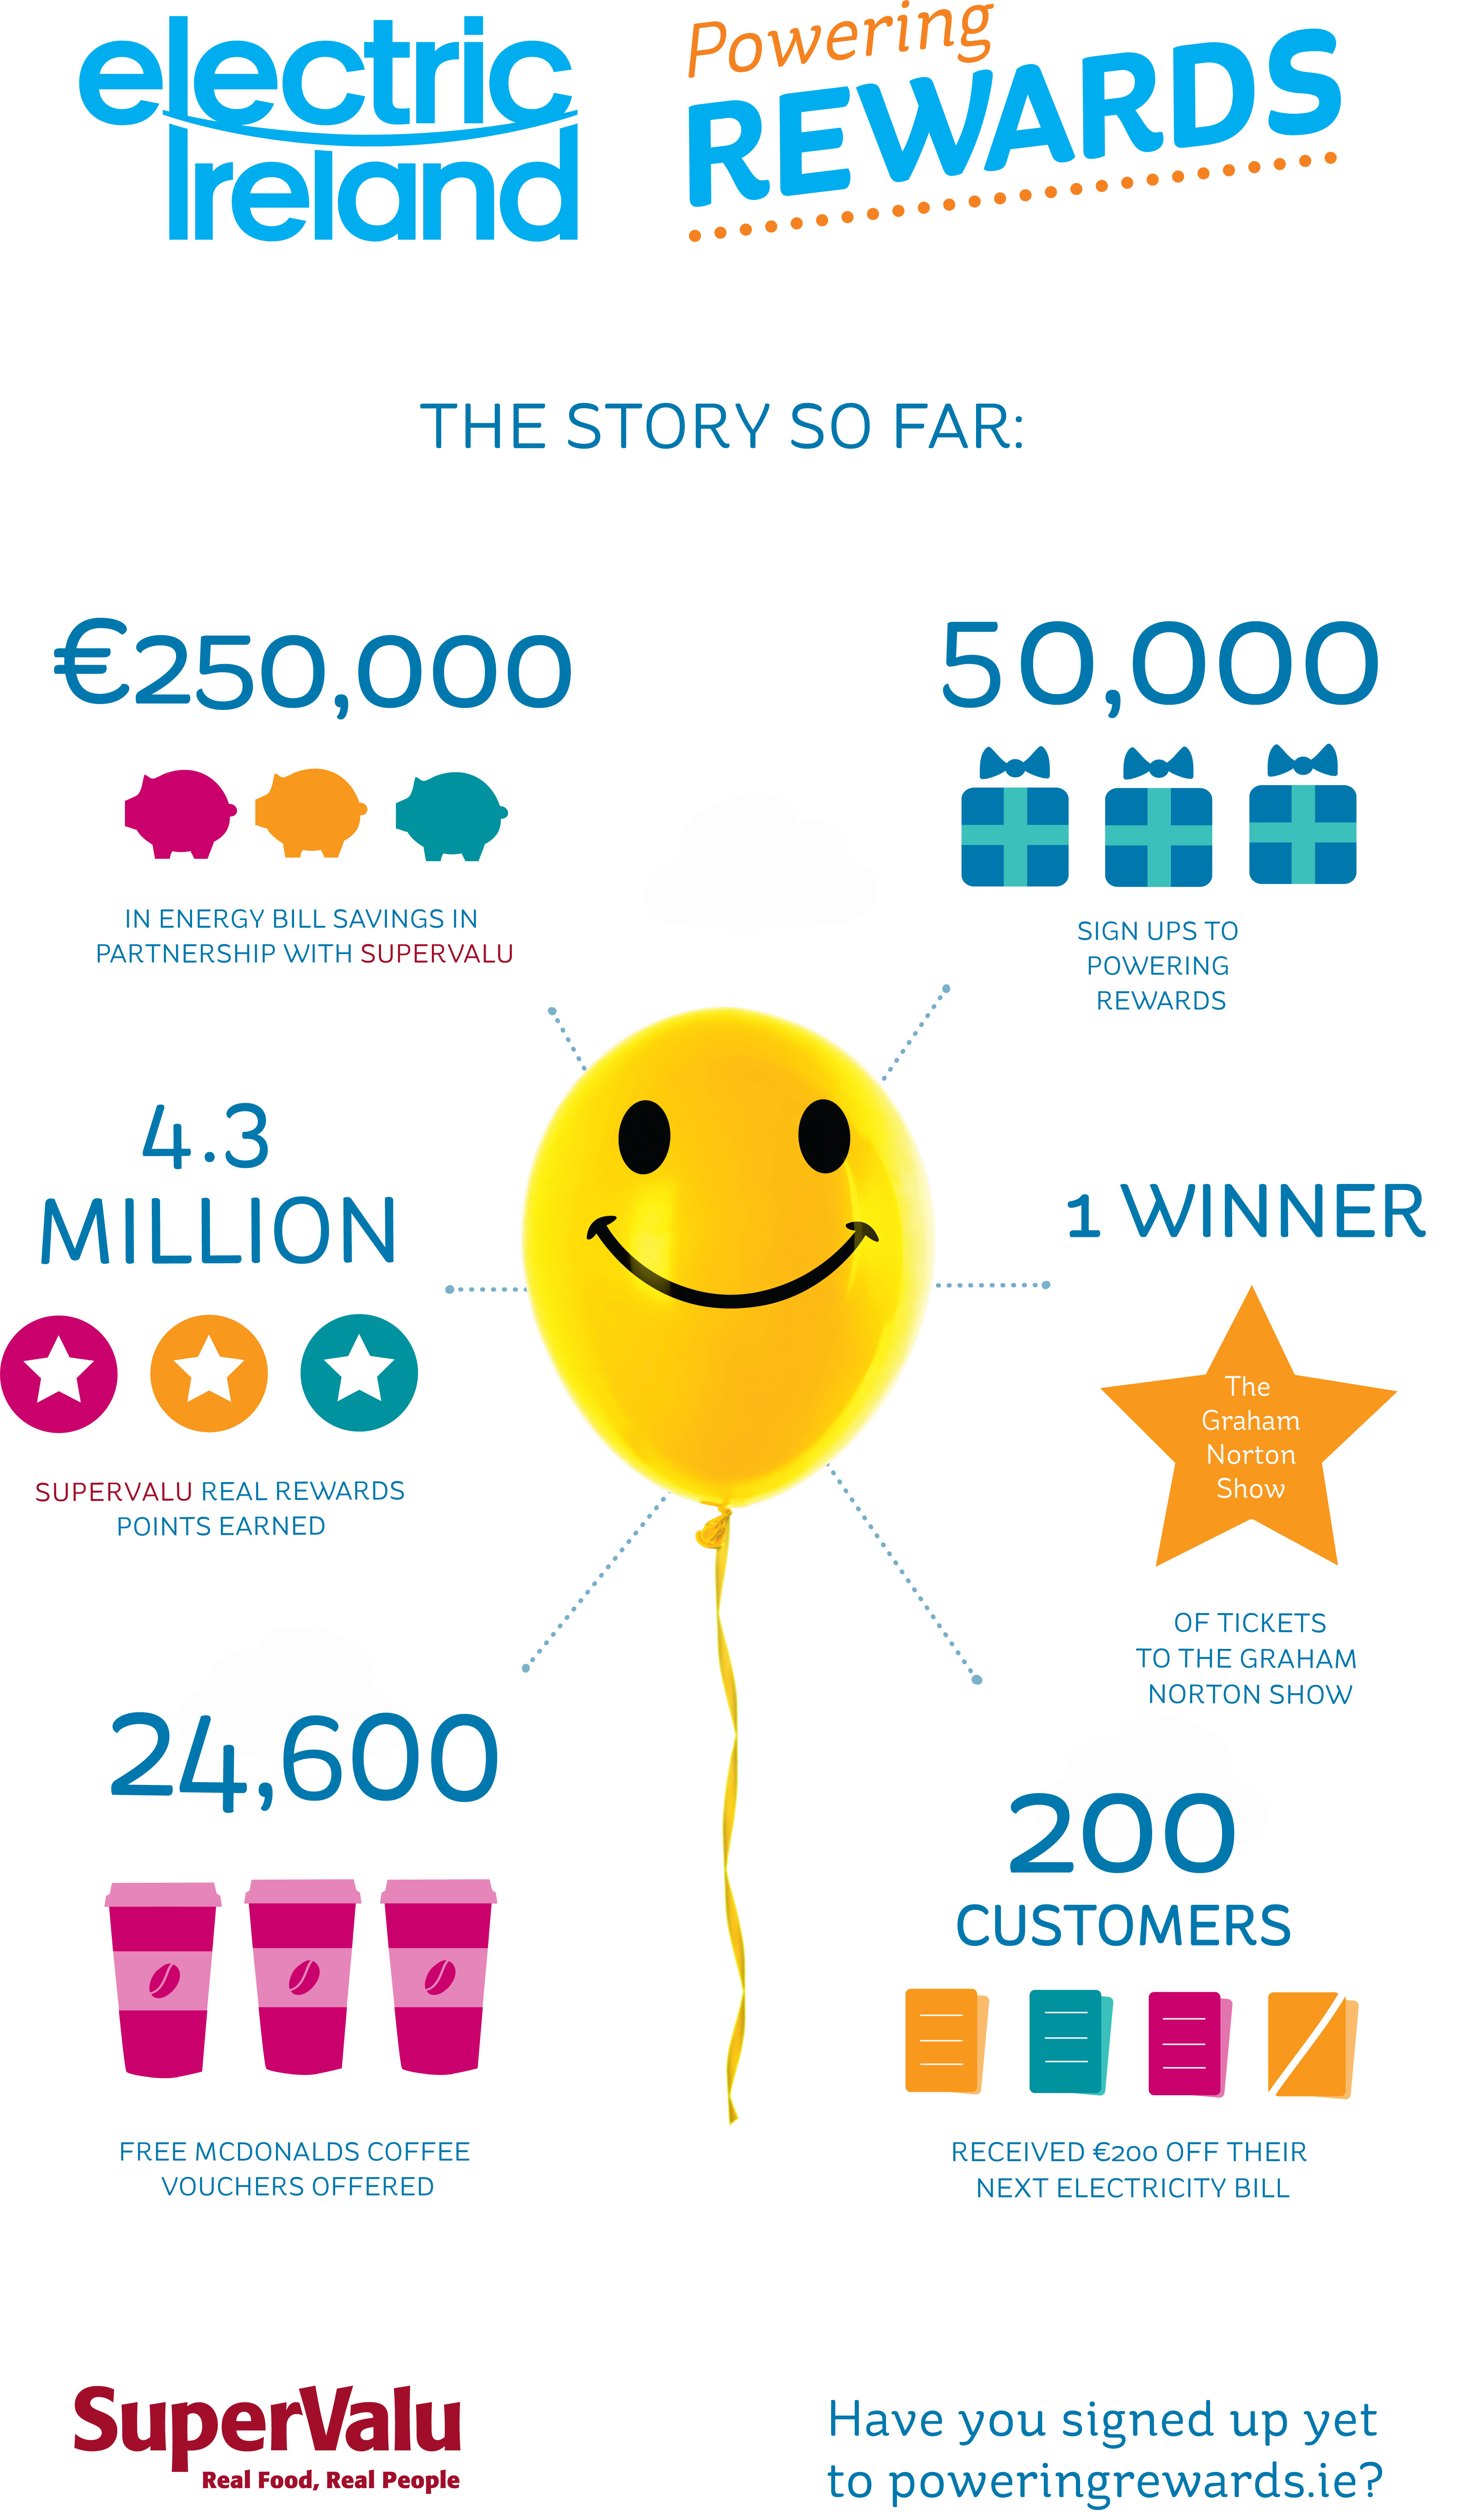 Electric Ireland Powering Rewards Infographic